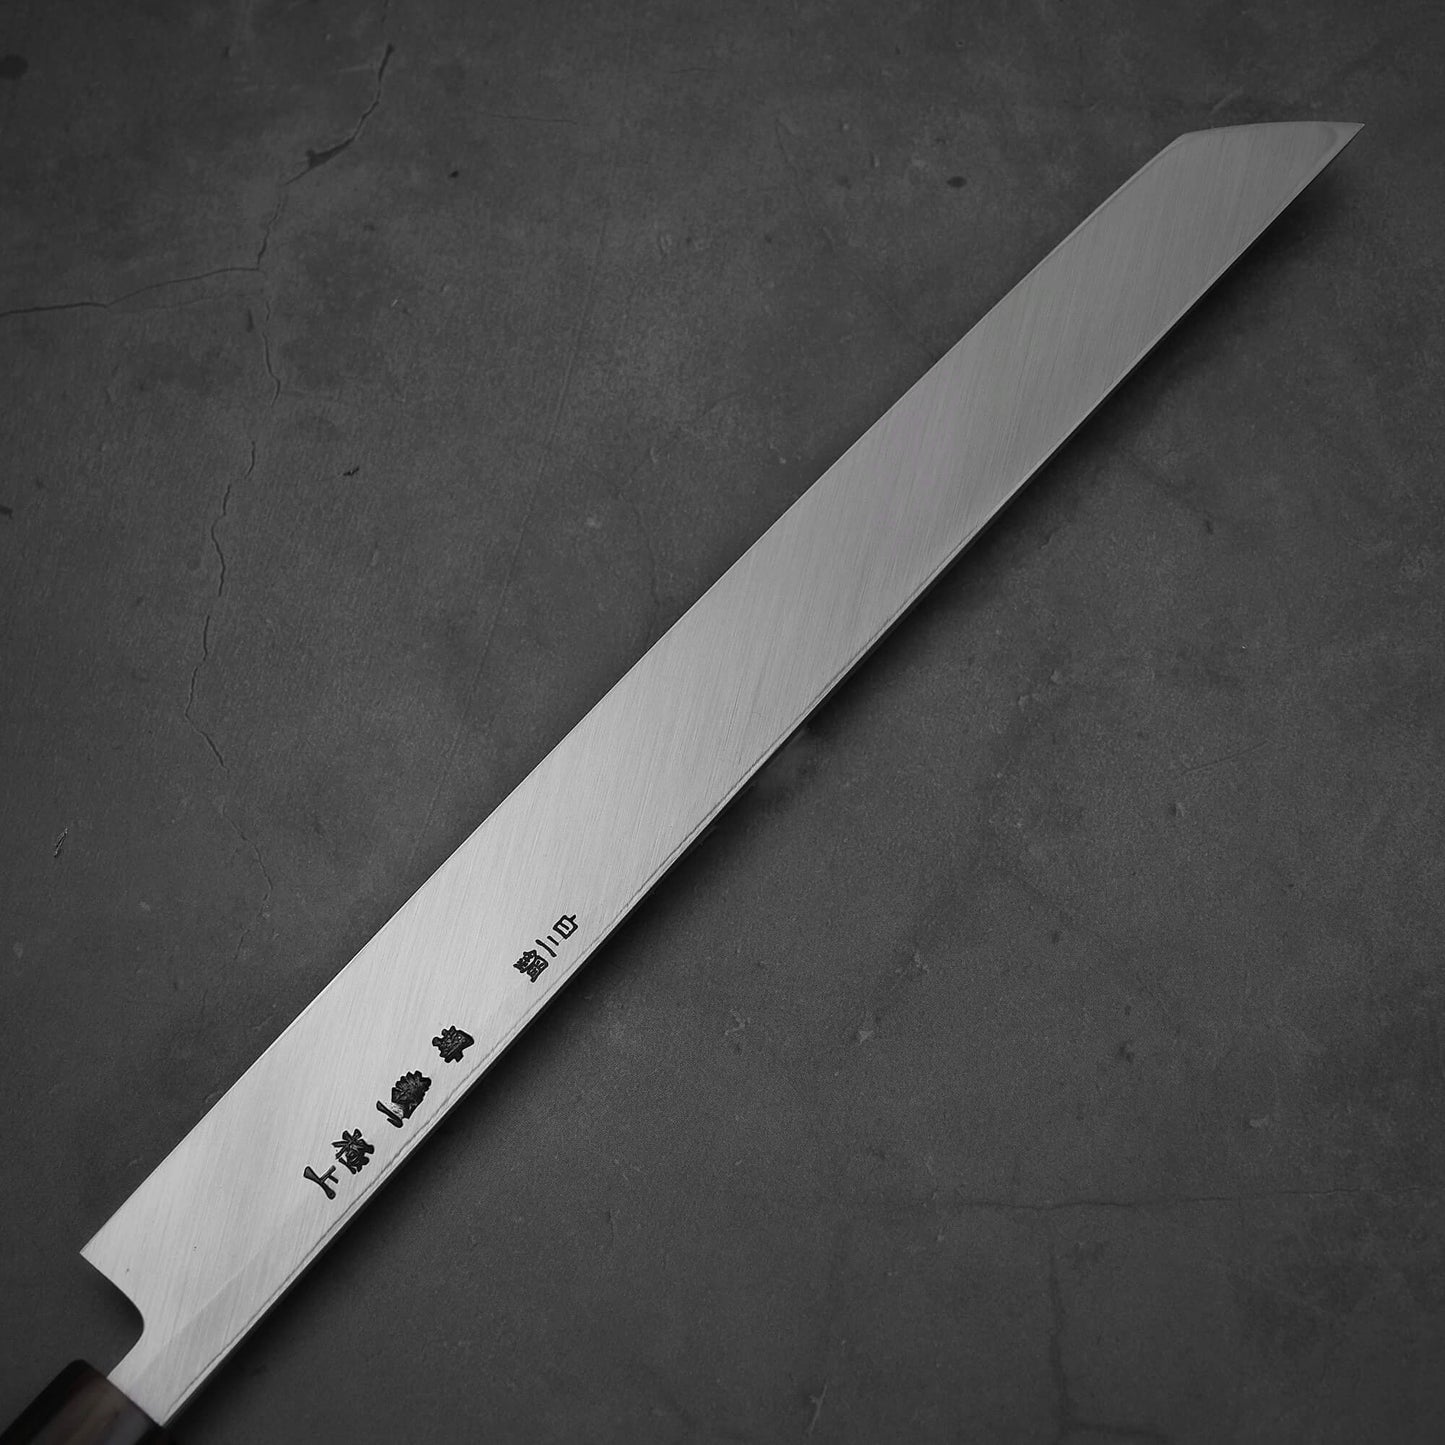 Close up view of Yoshikazu Tanaka sakimaru takohiki knife with a hand-forged blade made of shirogami#2 steel. Image shows the back side of the knife